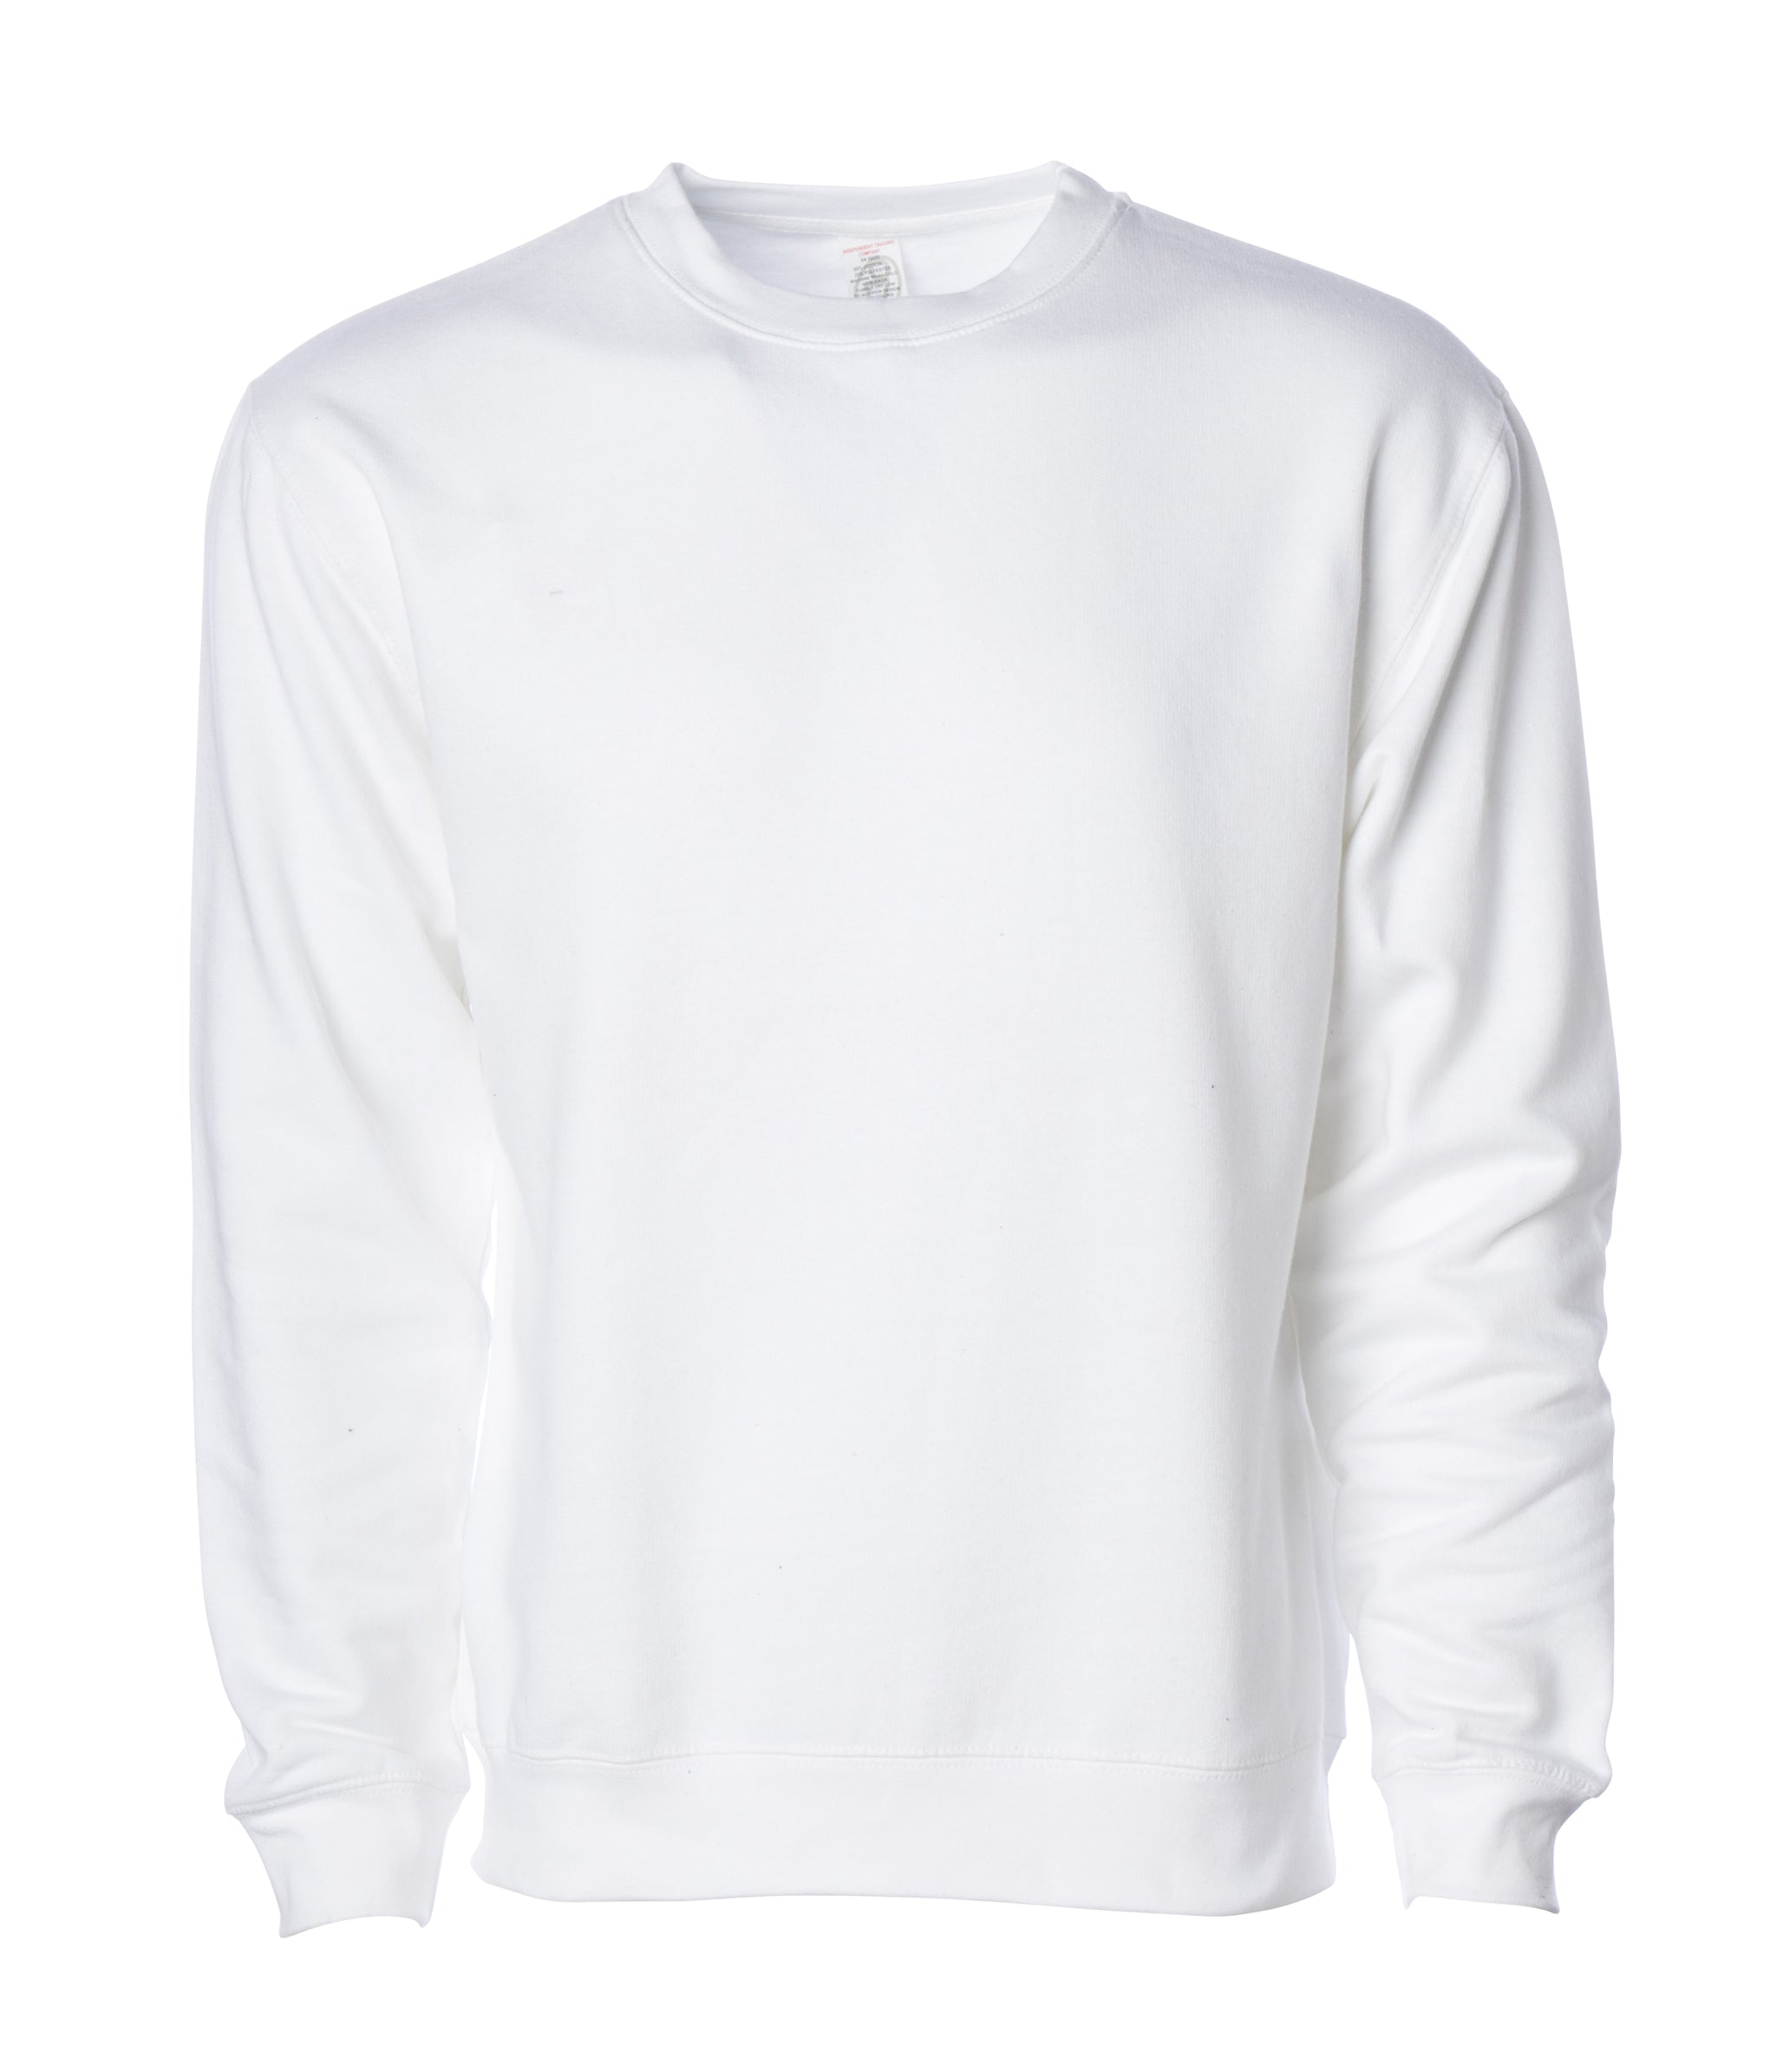 Mens Crewneck Pullover Sweatshirts | Independent Trading Company